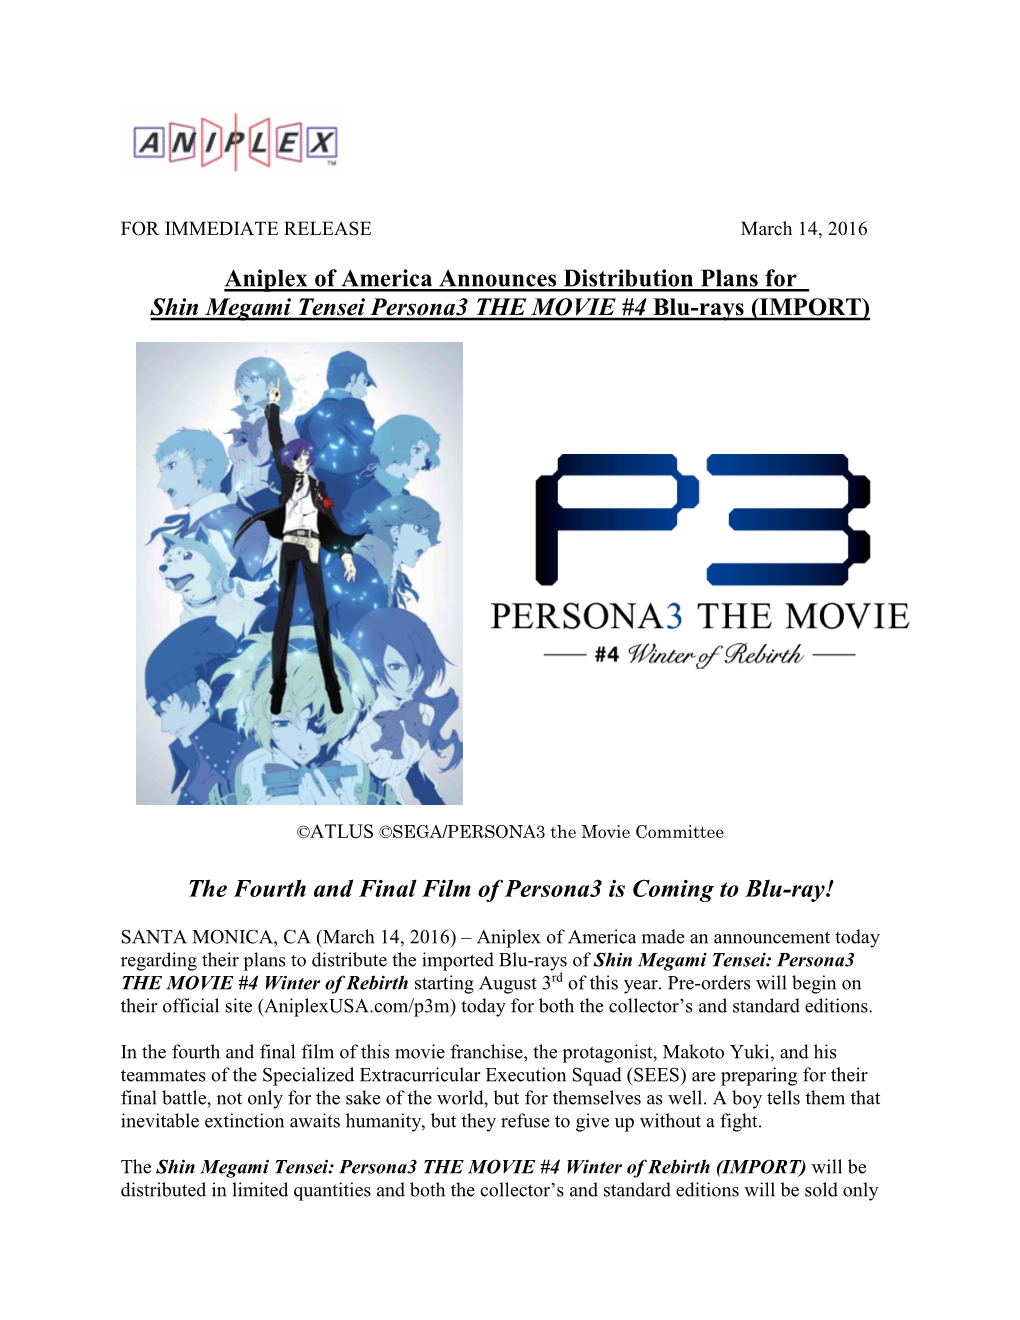 Aniplex of America Announces Distribution Plans for Shin Megami Tensei Persona3 the MOVIE #4 Blu-Rays (IMPORT)